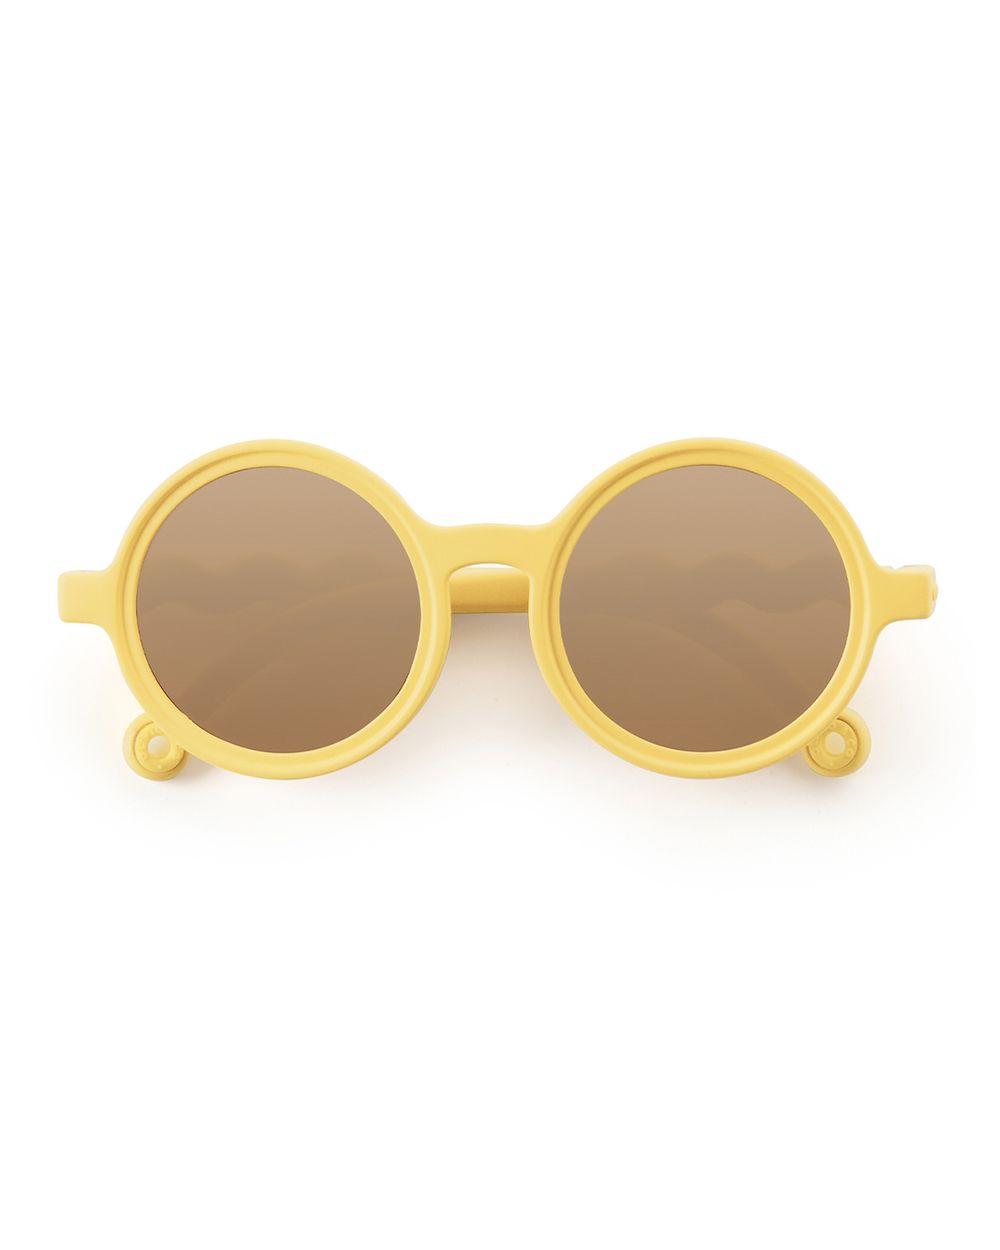 Toddler Round Sunglasses Citrus Yellow